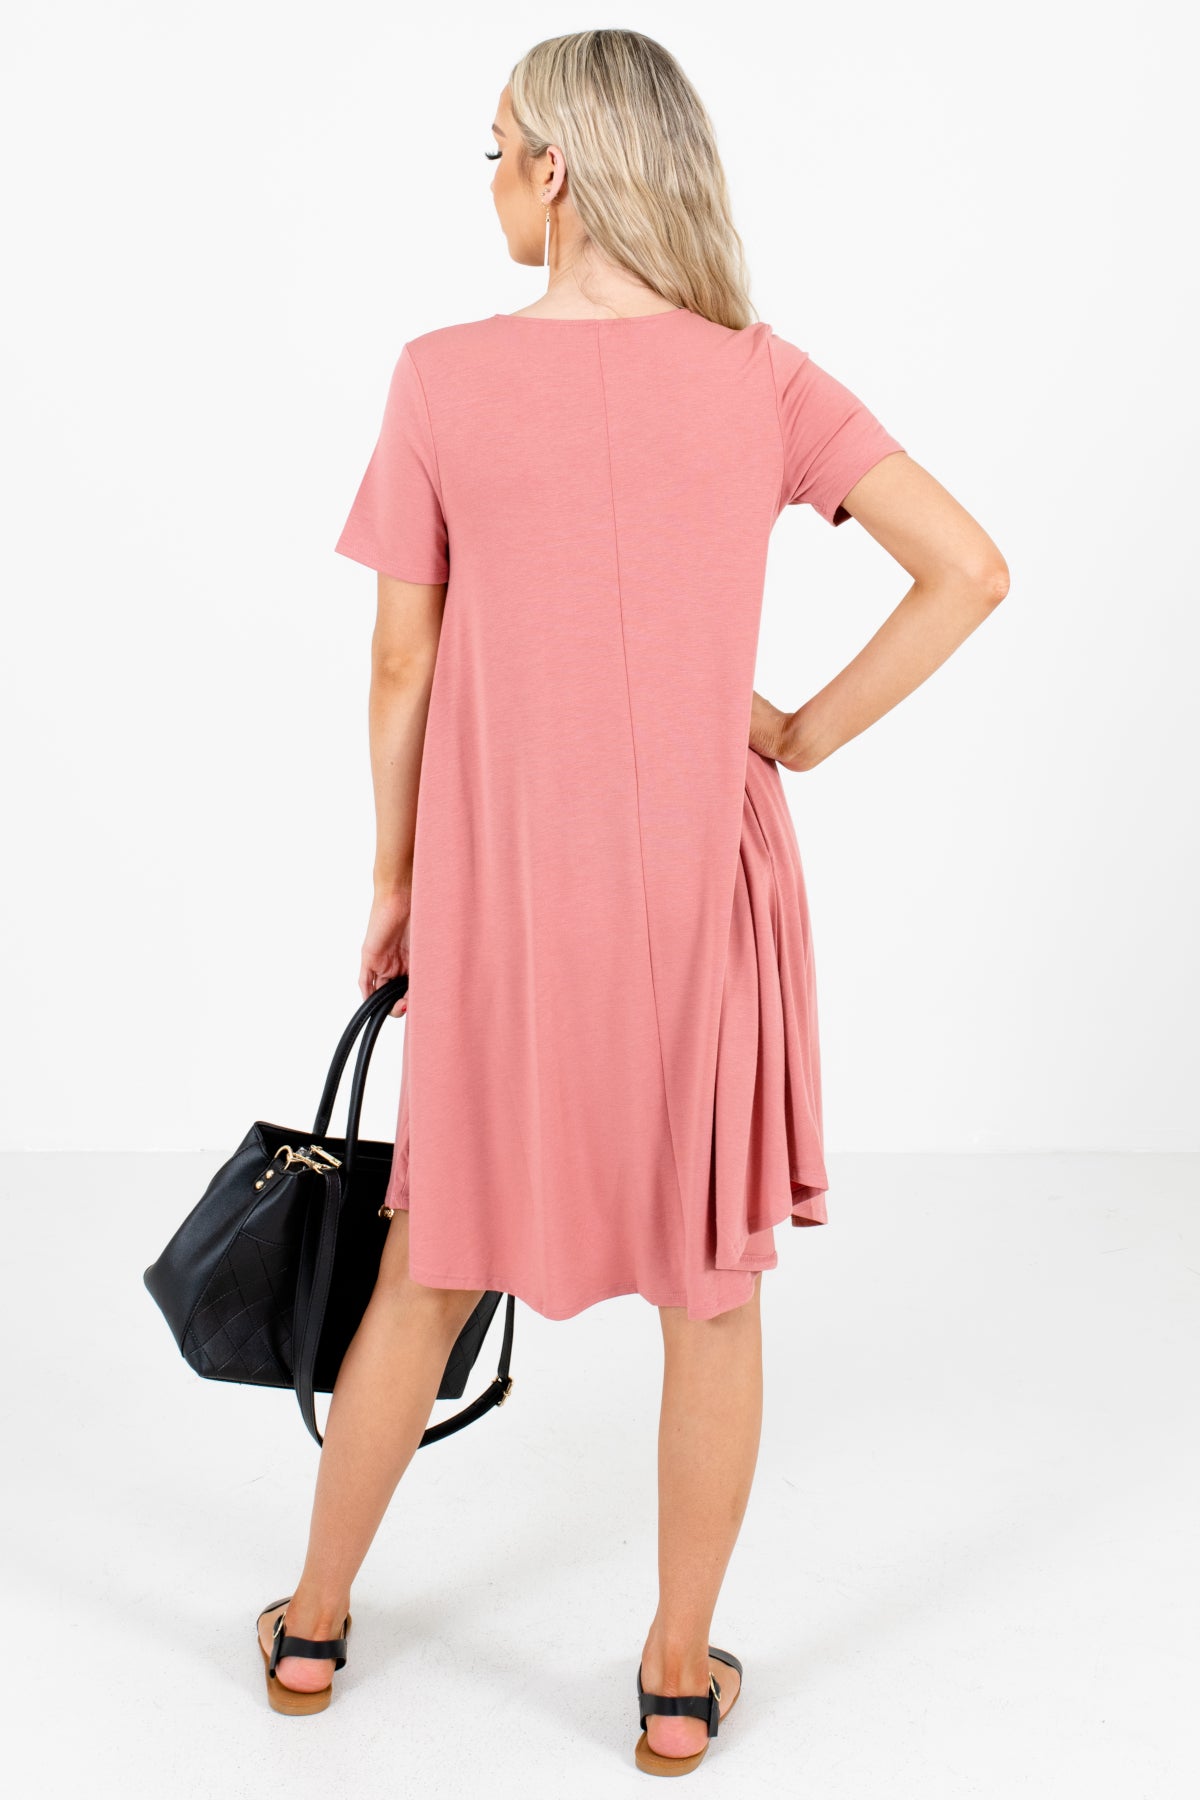 Women's Pink Flowy Silhouette Boutique Knee-Length Dress